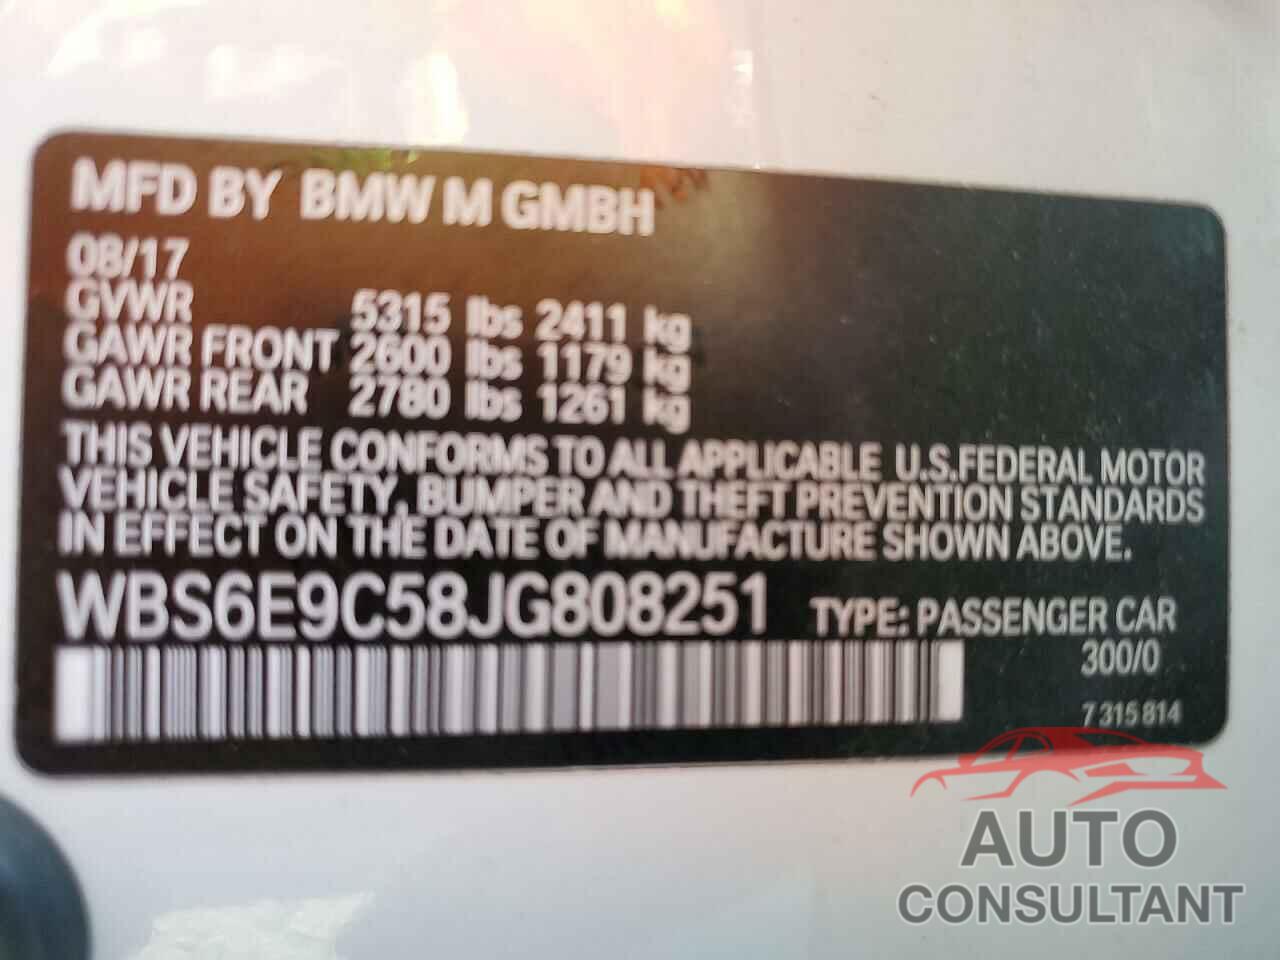 BMW M6 2018 - WBS6E9C58JG808251